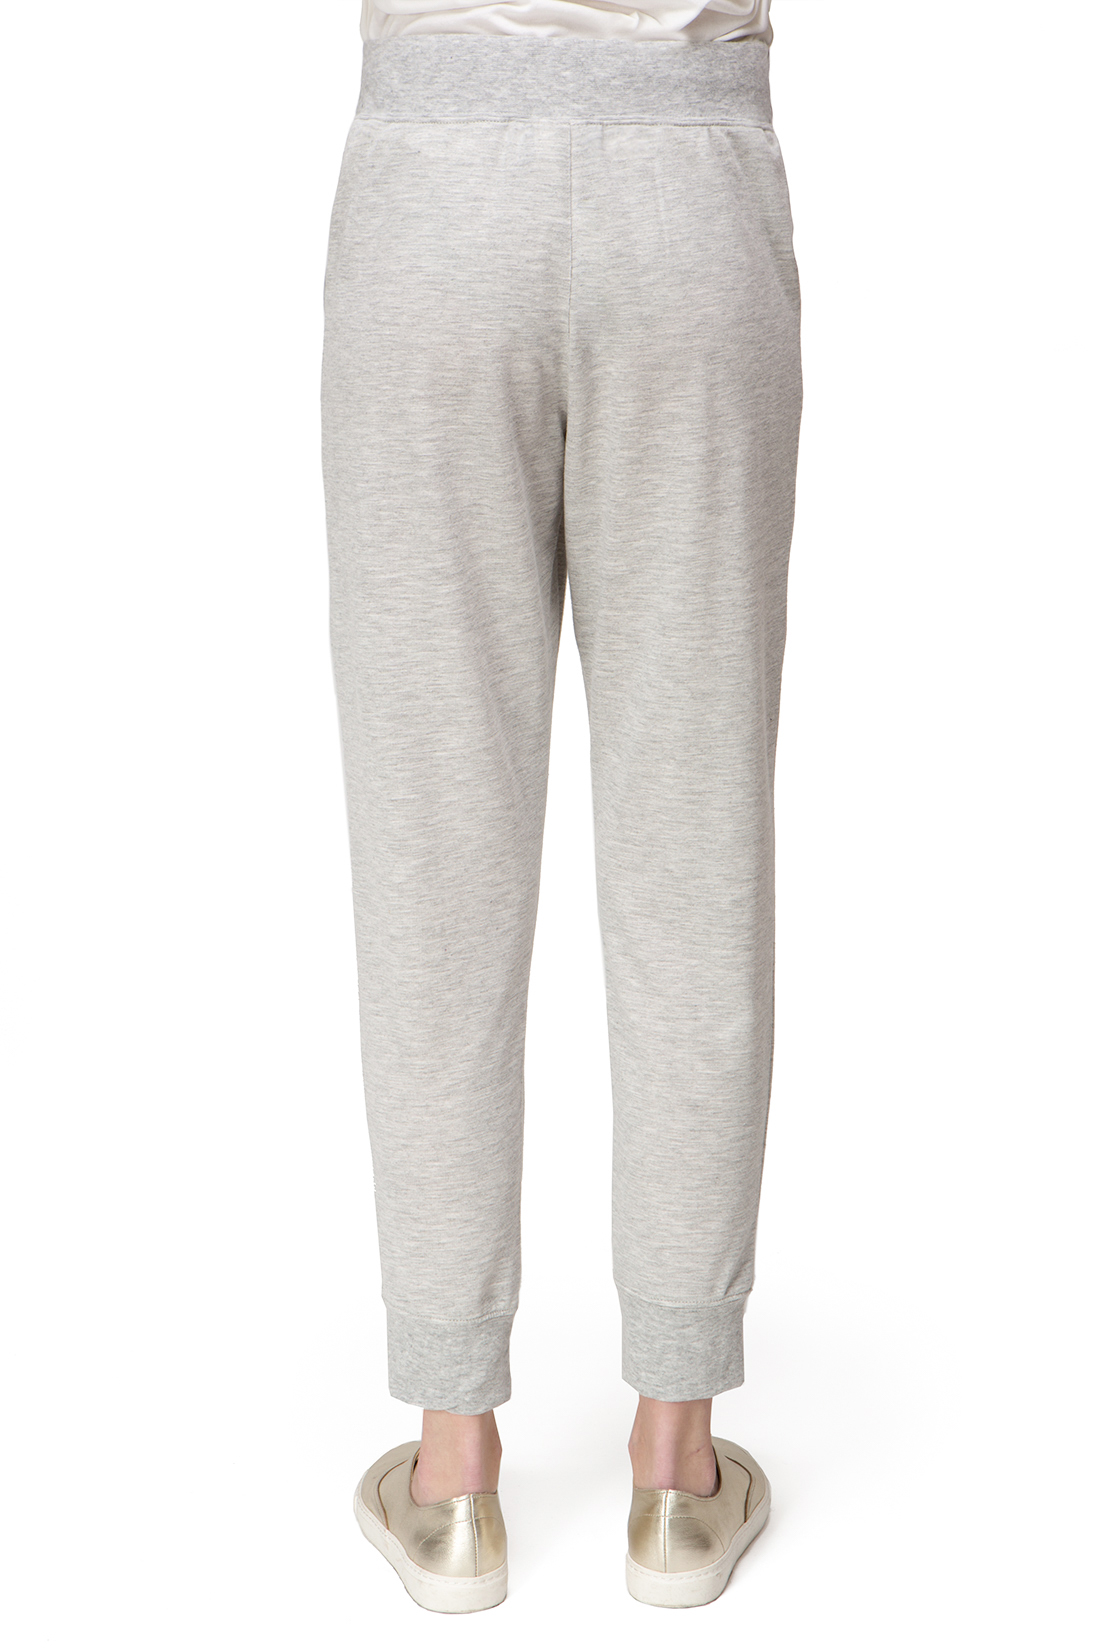 Спортивные брюки с манжетами (арт. baon B297302), размер XXL, цвет silver melange#серый Спортивные брюки с манжетами (арт. baon B297302) - фото 2